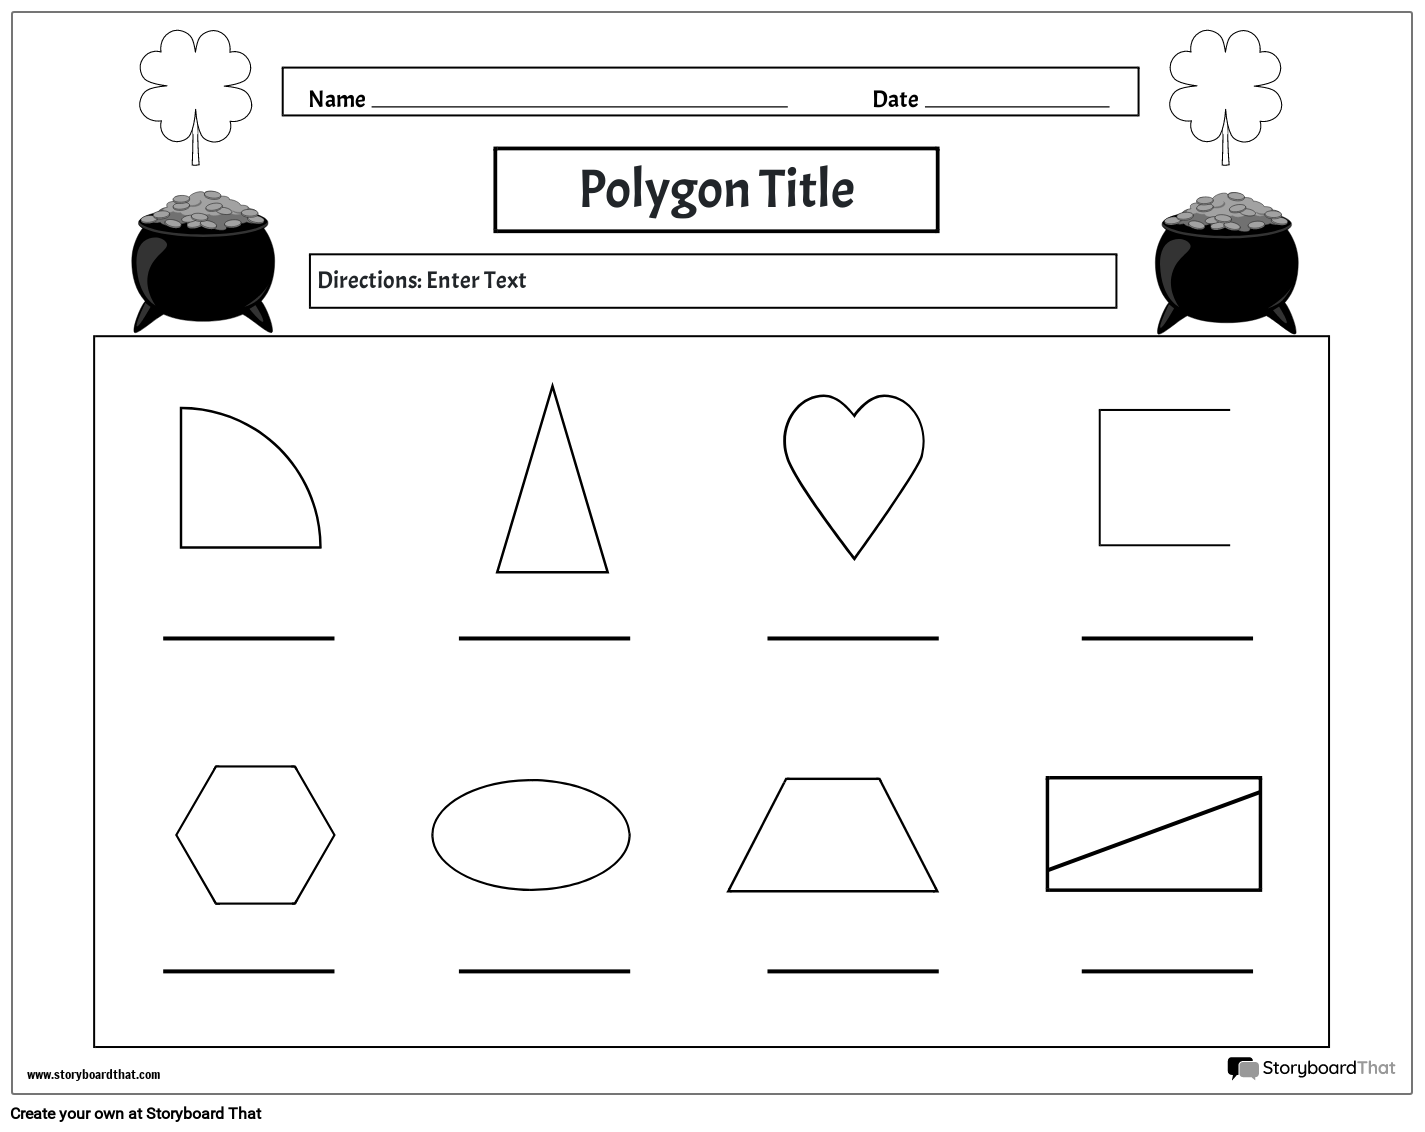 Polygon irish theme worksheet